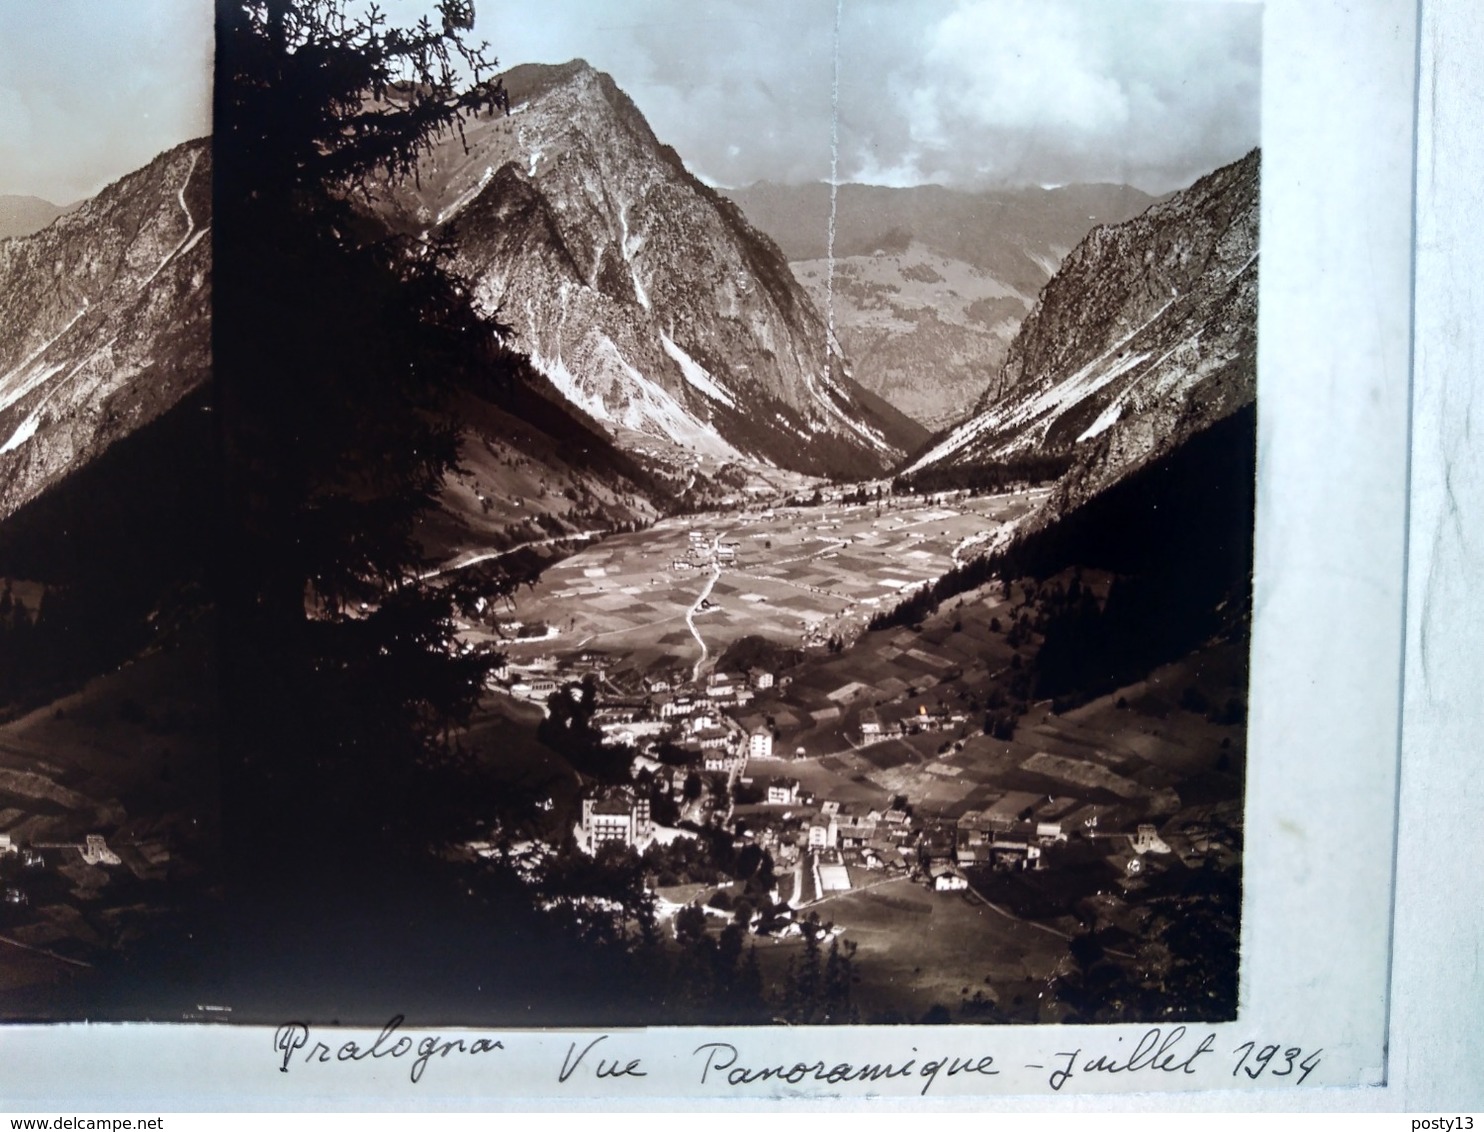 PRALOGNAN (73) -  STEREO - Vue Panoramique - Juillet 1934 - Plaque De Verre 17x 8,5 - Superbe - Diapositiva Su Vetro